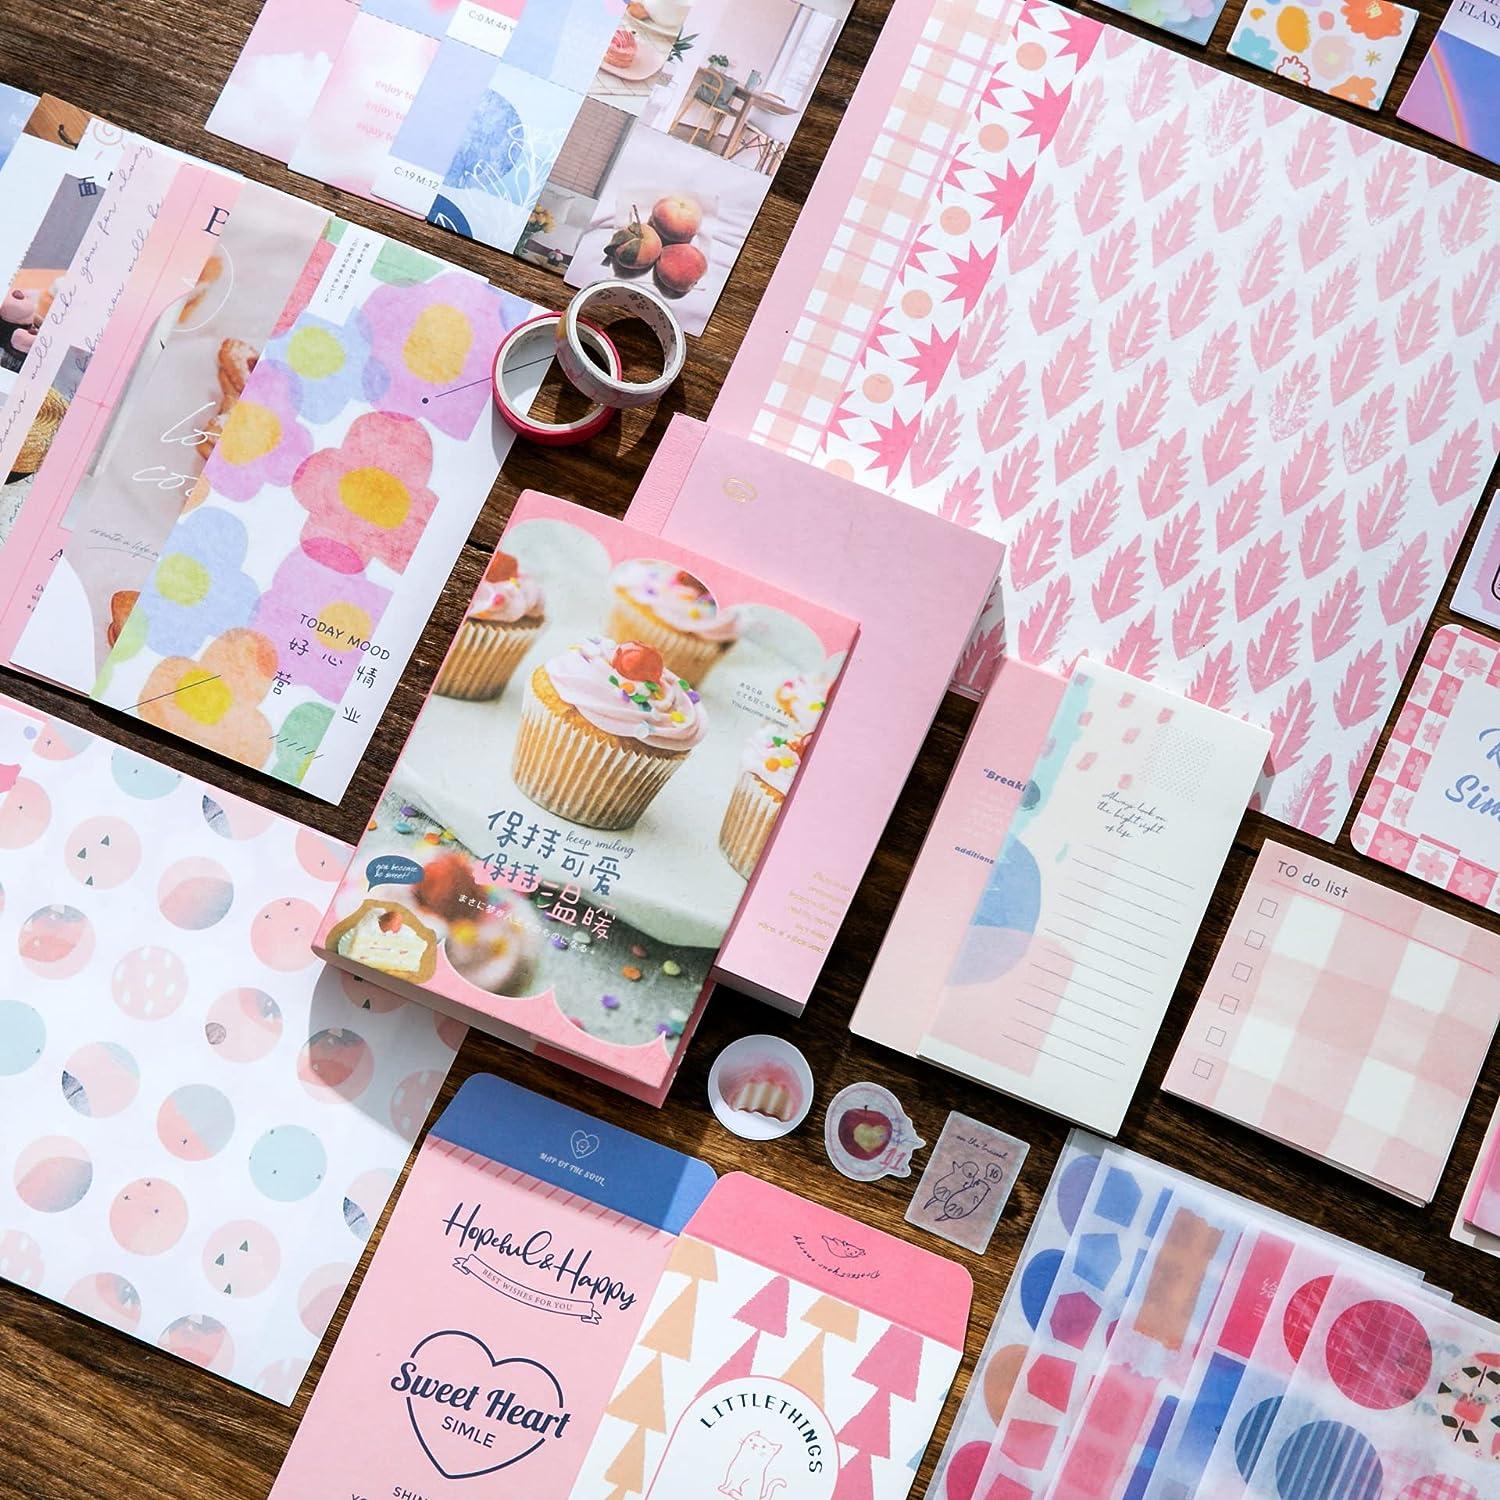 348 Pcs Scrapbooking Supplies Kit, Pink Cute Kawaii Aesthetic Scrapbook Kit  for Bullet Junk Journal, Stationery, A6 Grid Notebook, DIY Journaling  Supplies, Birthday Craft Gift for Teen Girl Kid Women